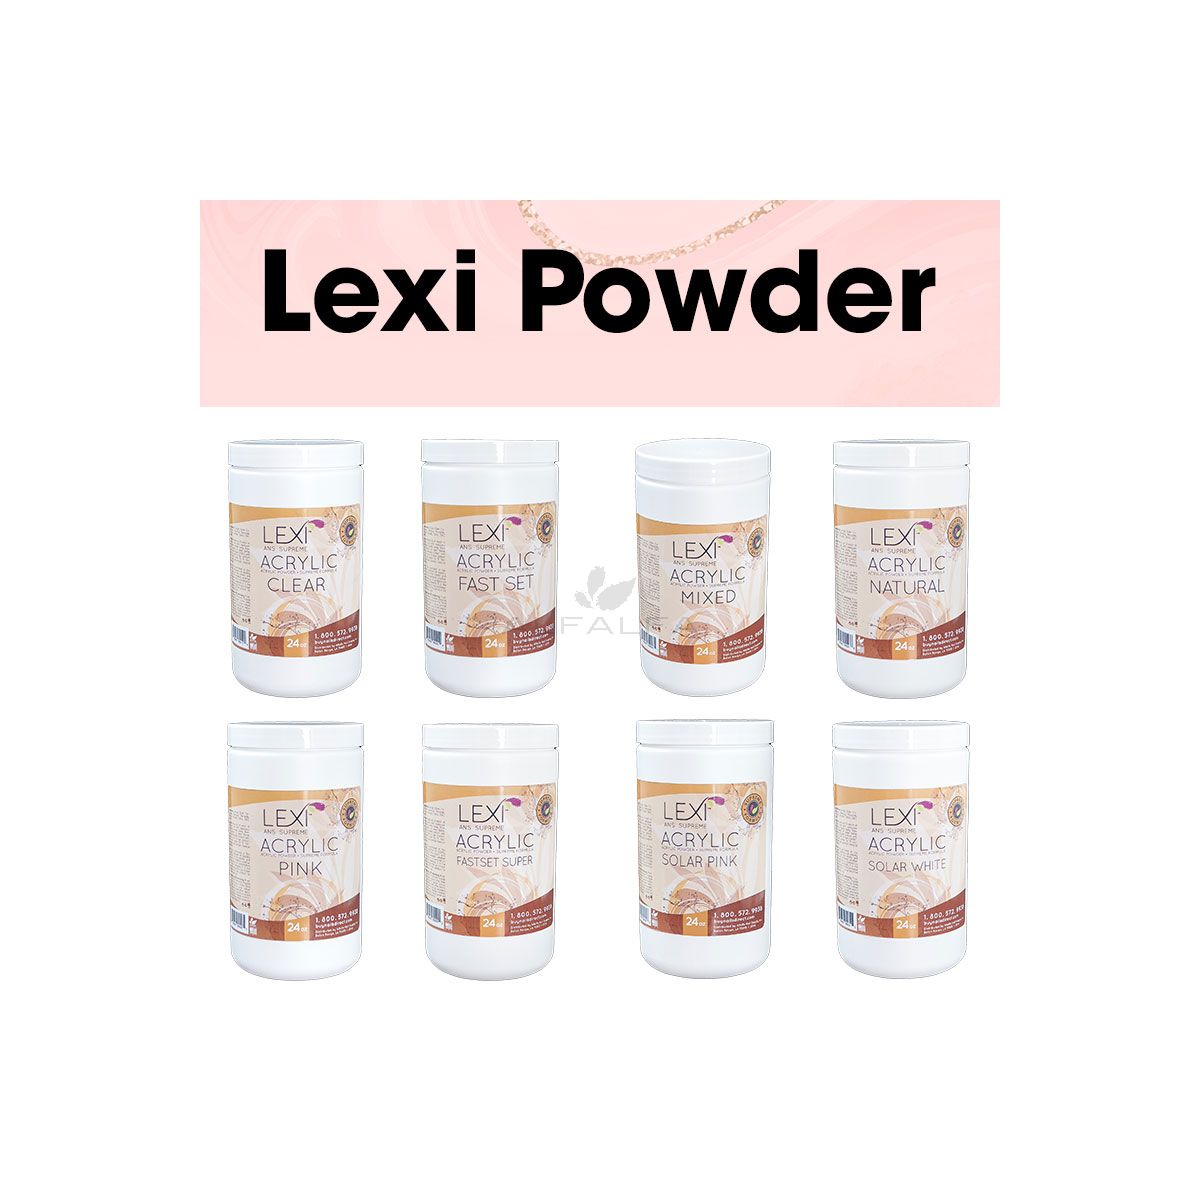 Lexi Acrylic Powder - 24 oz